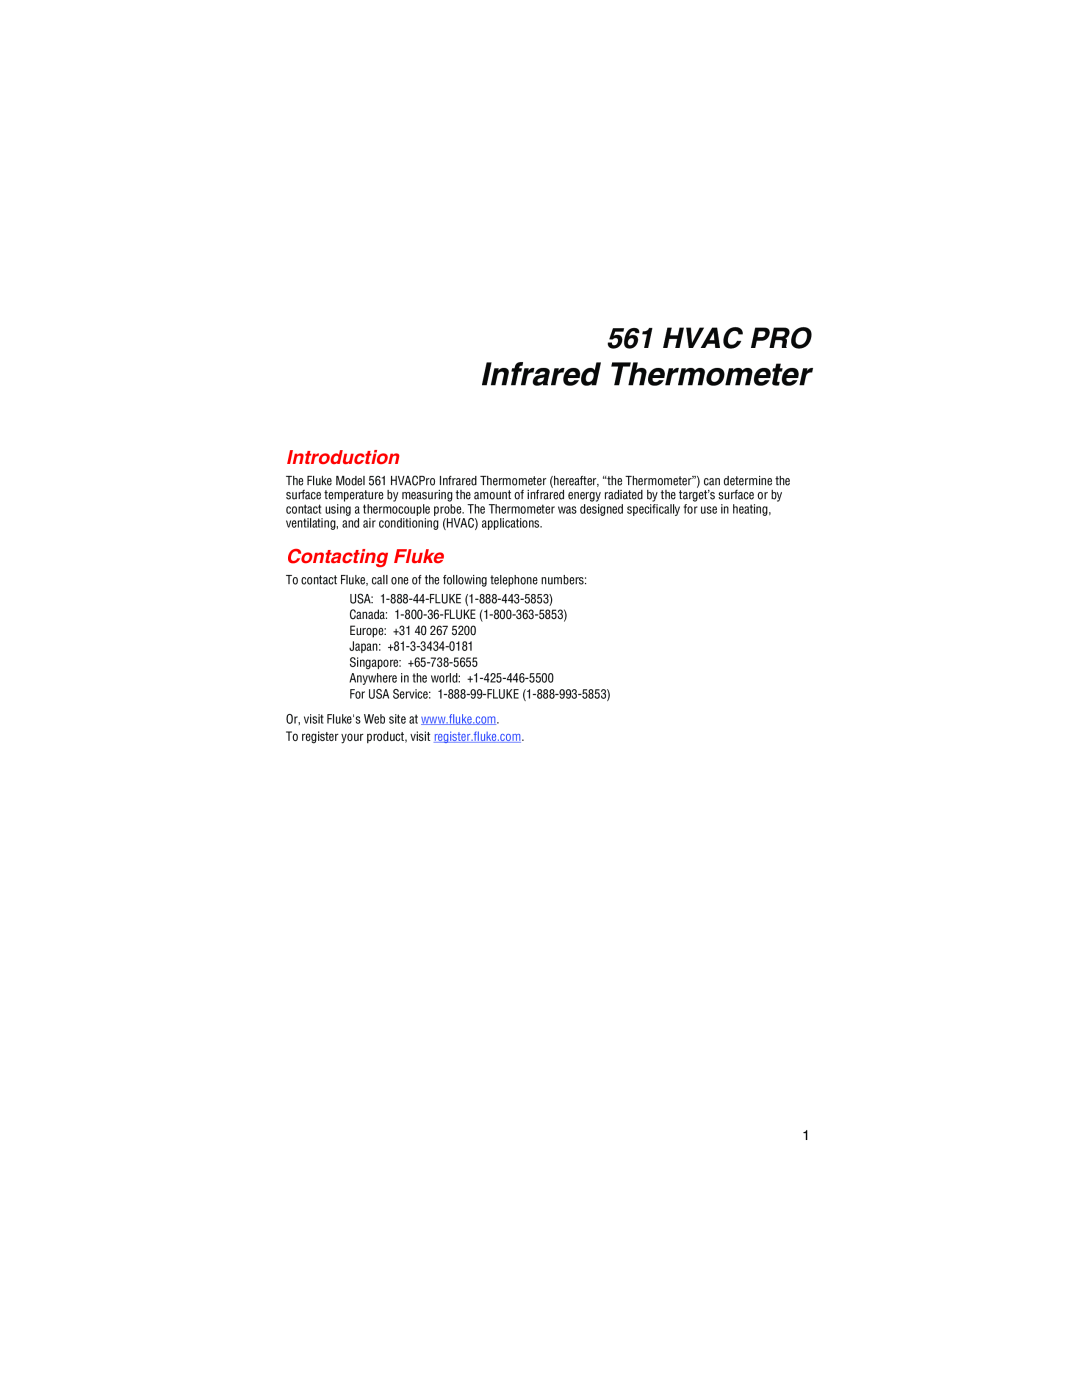 Fluke 561 user manual Hvac Pro, Introduction, Contacting Fluke, Infrared Thermometer 